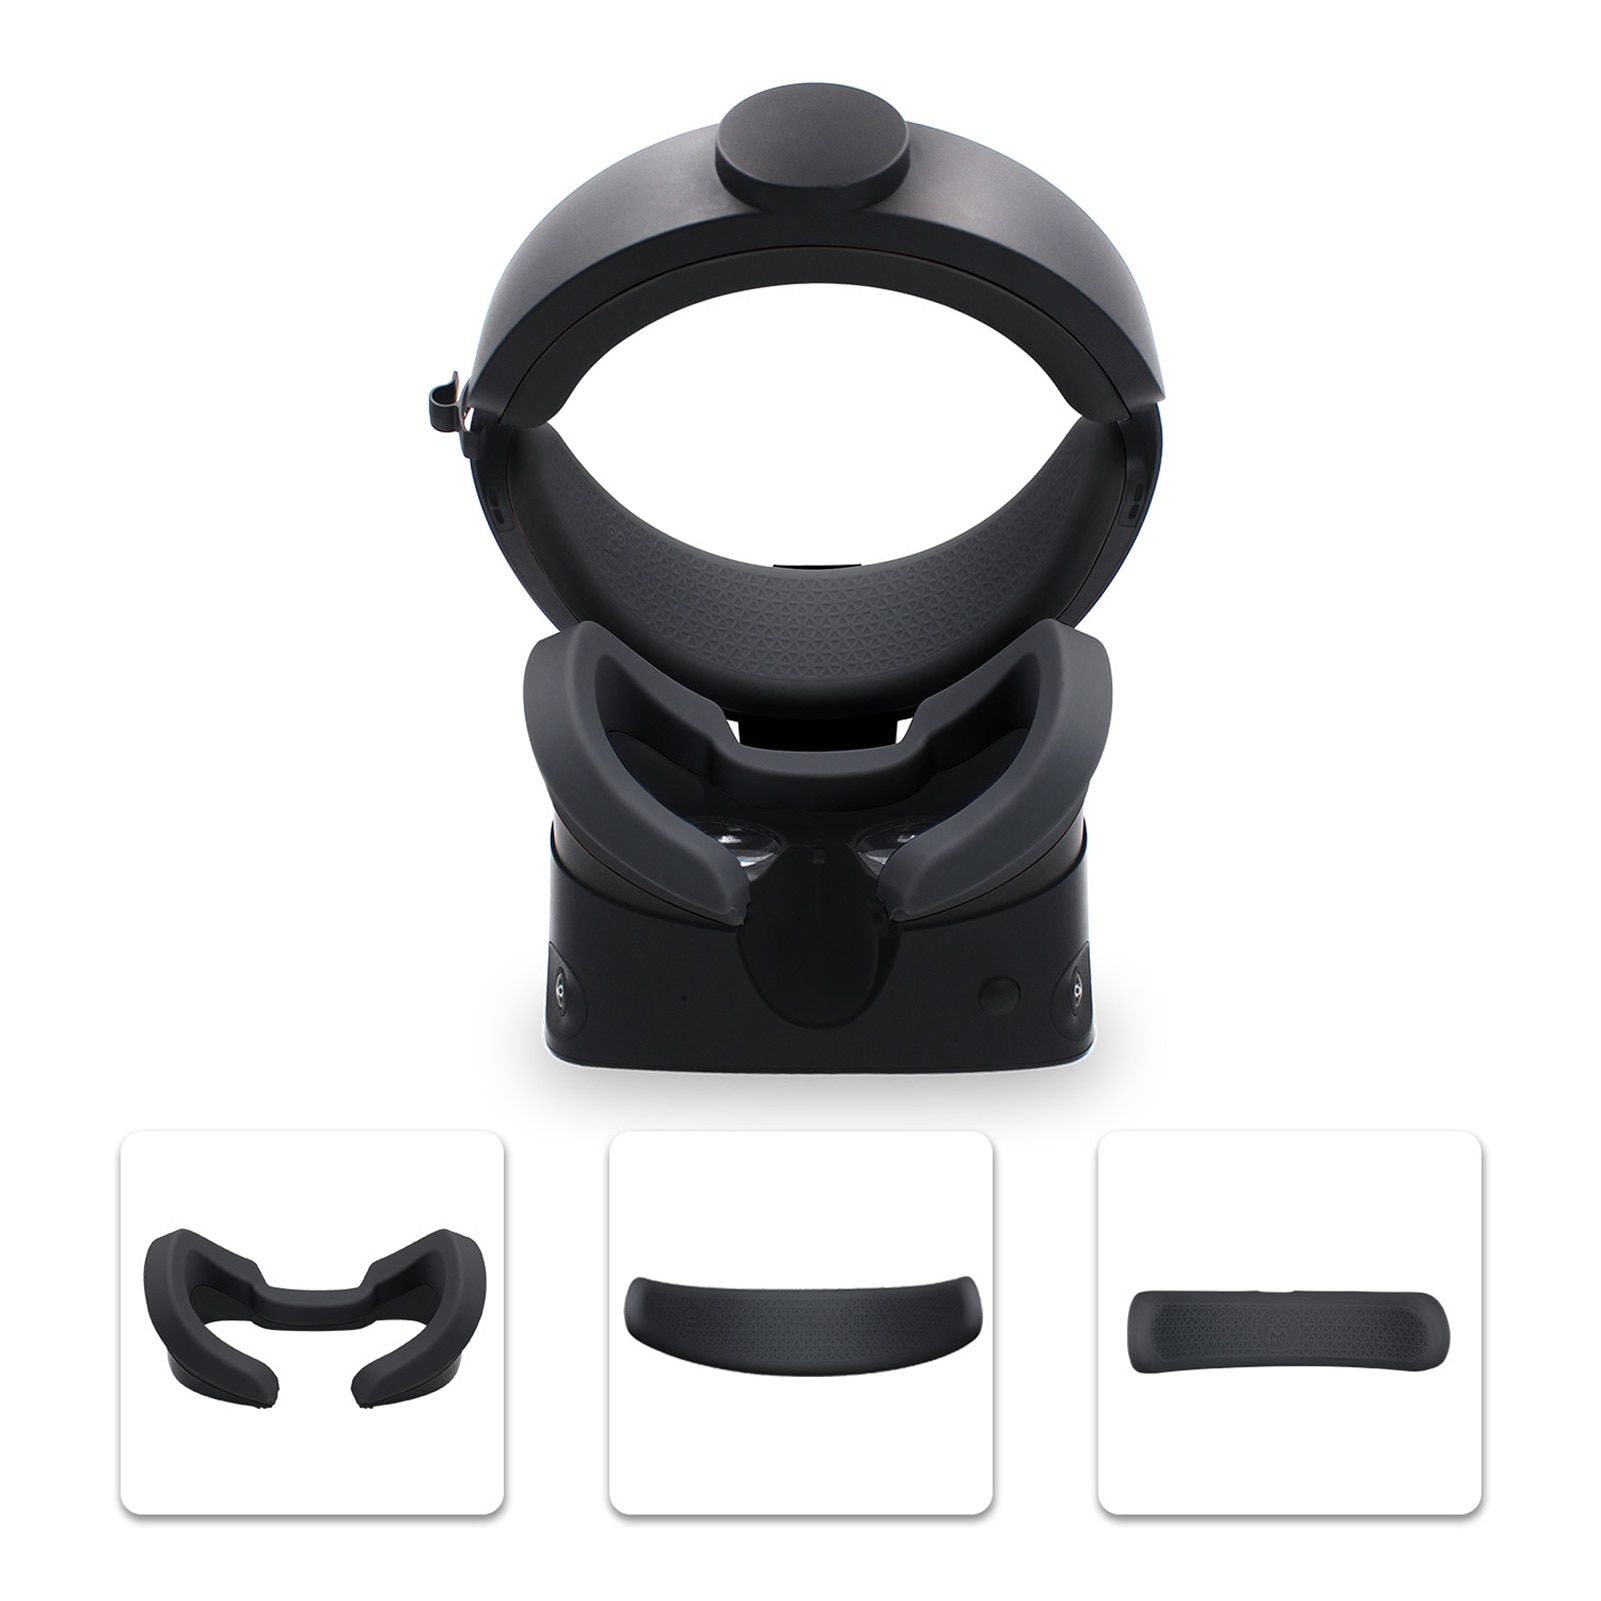 3 In1 Vr Gezicht Pad & Front Achter Foam Siliconen Covers Voor Oculus Rift S Vr Bril Oogmasker gezichtsmasker Huid Rift S Accessoires